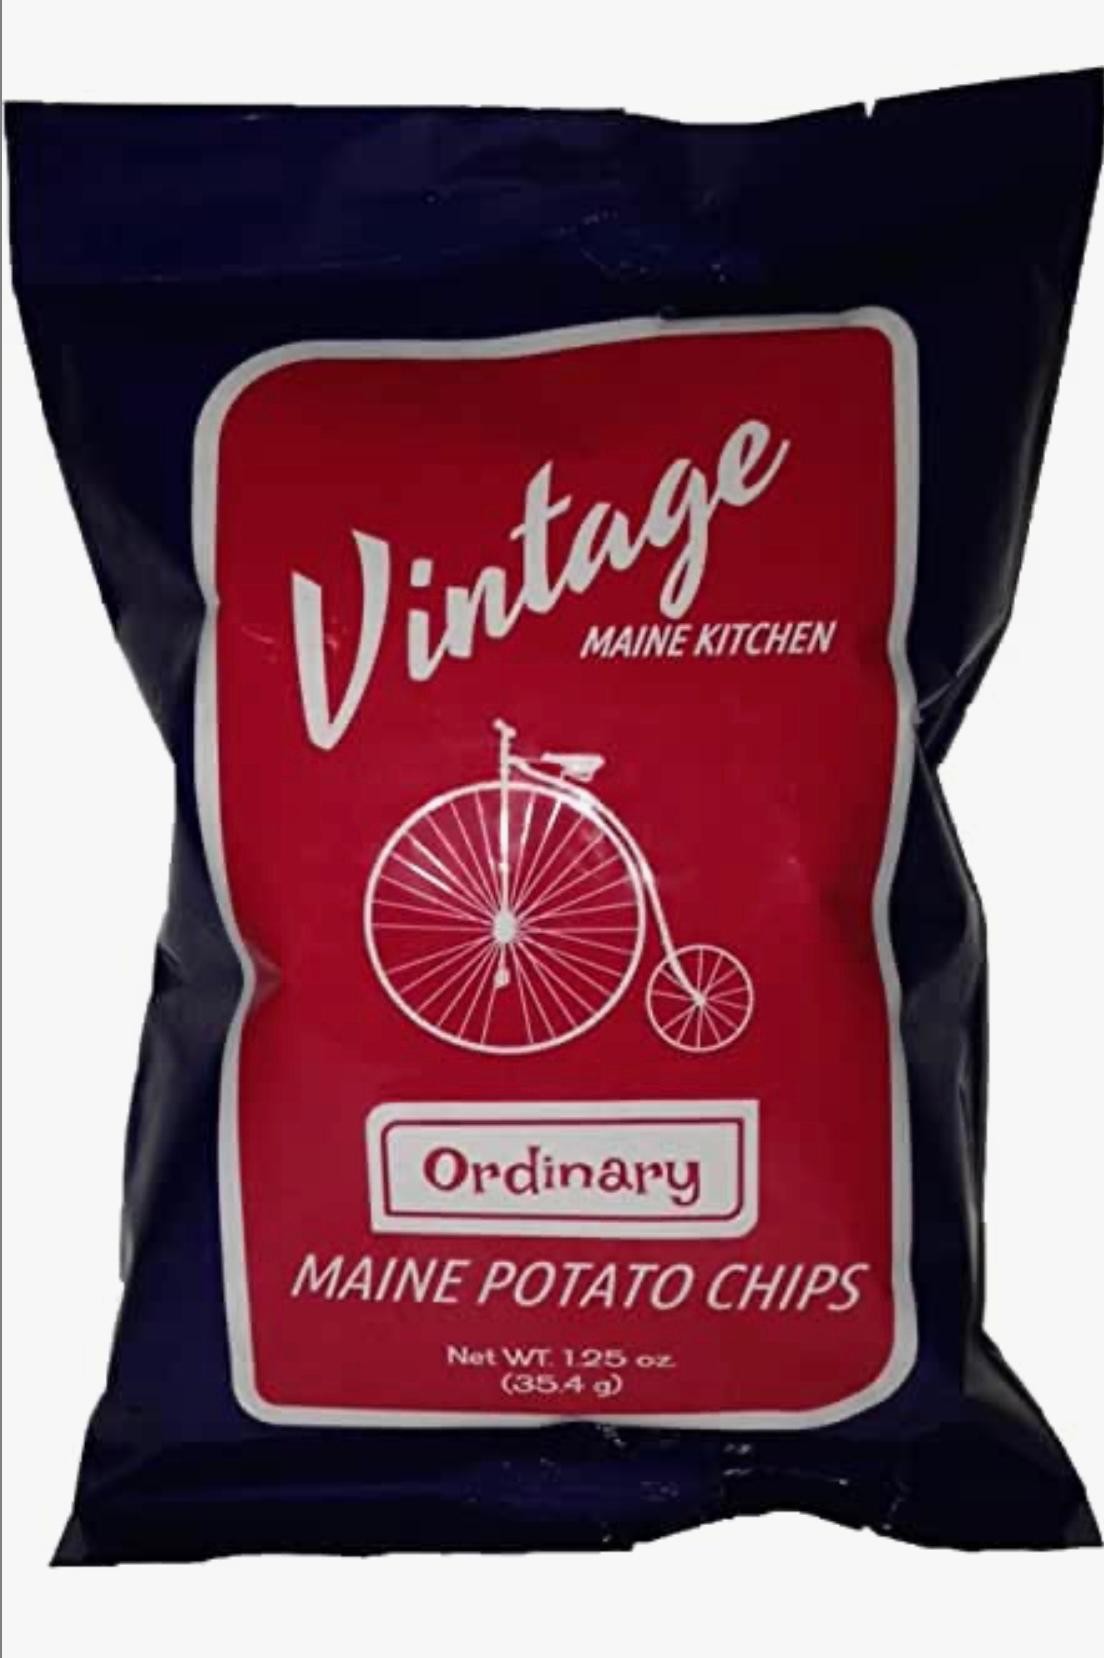 Vintage Maine Kitchen "Ordinary" Potato Chips 1.25 oz